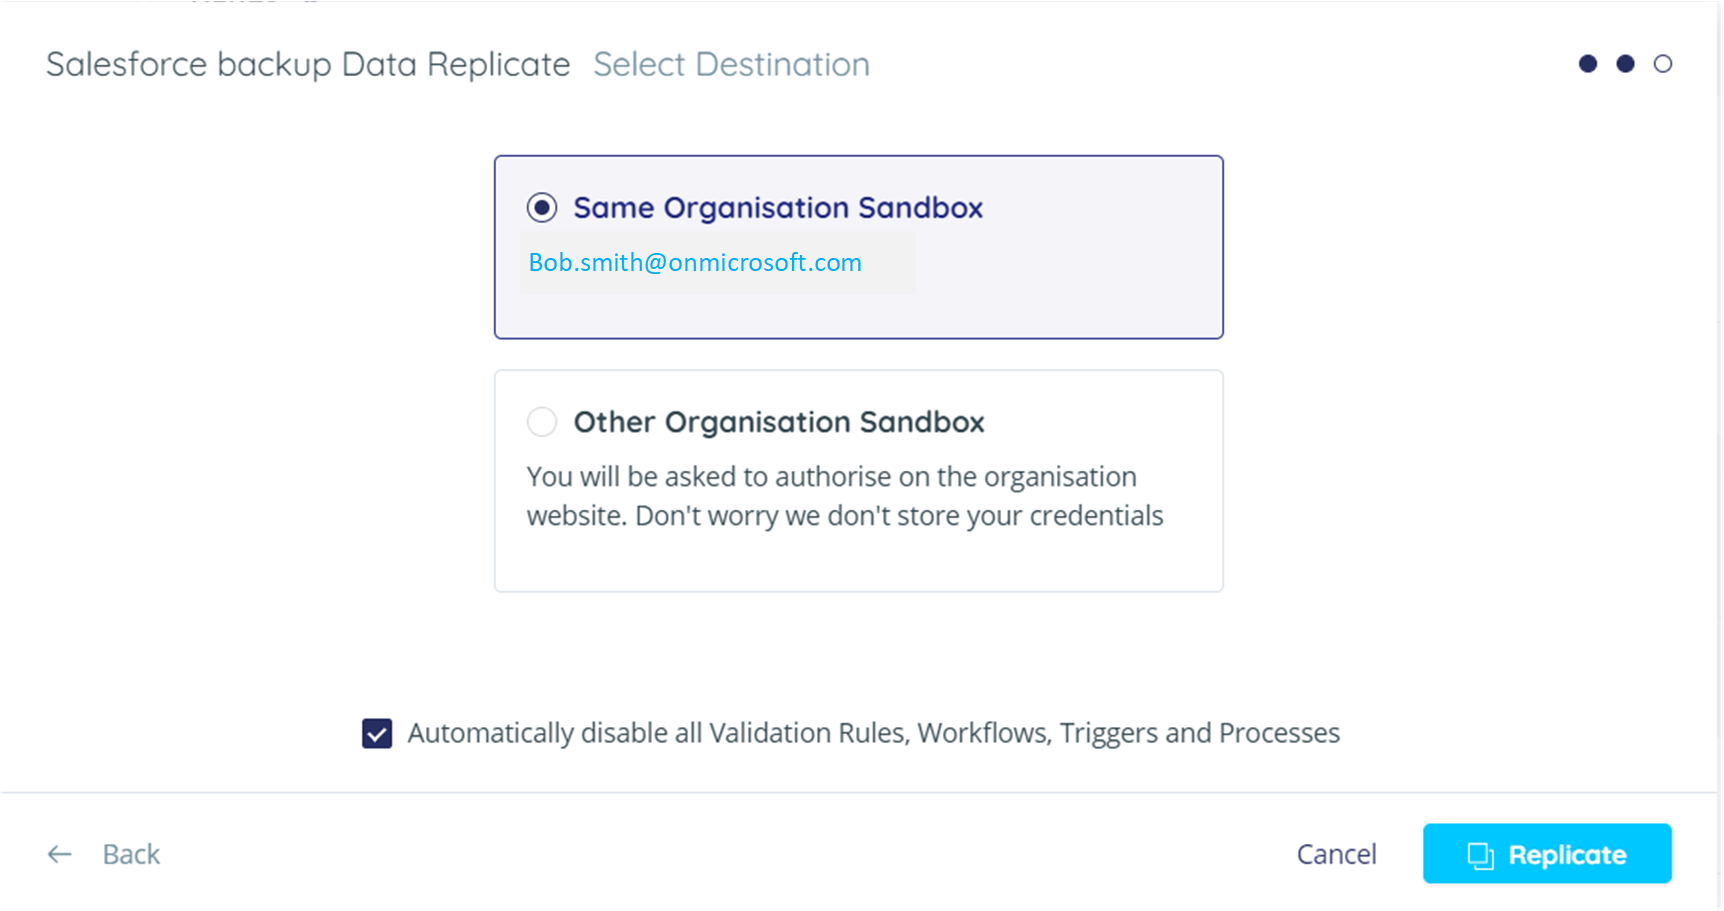 Same organization sandbox selected, with user's email displayed.